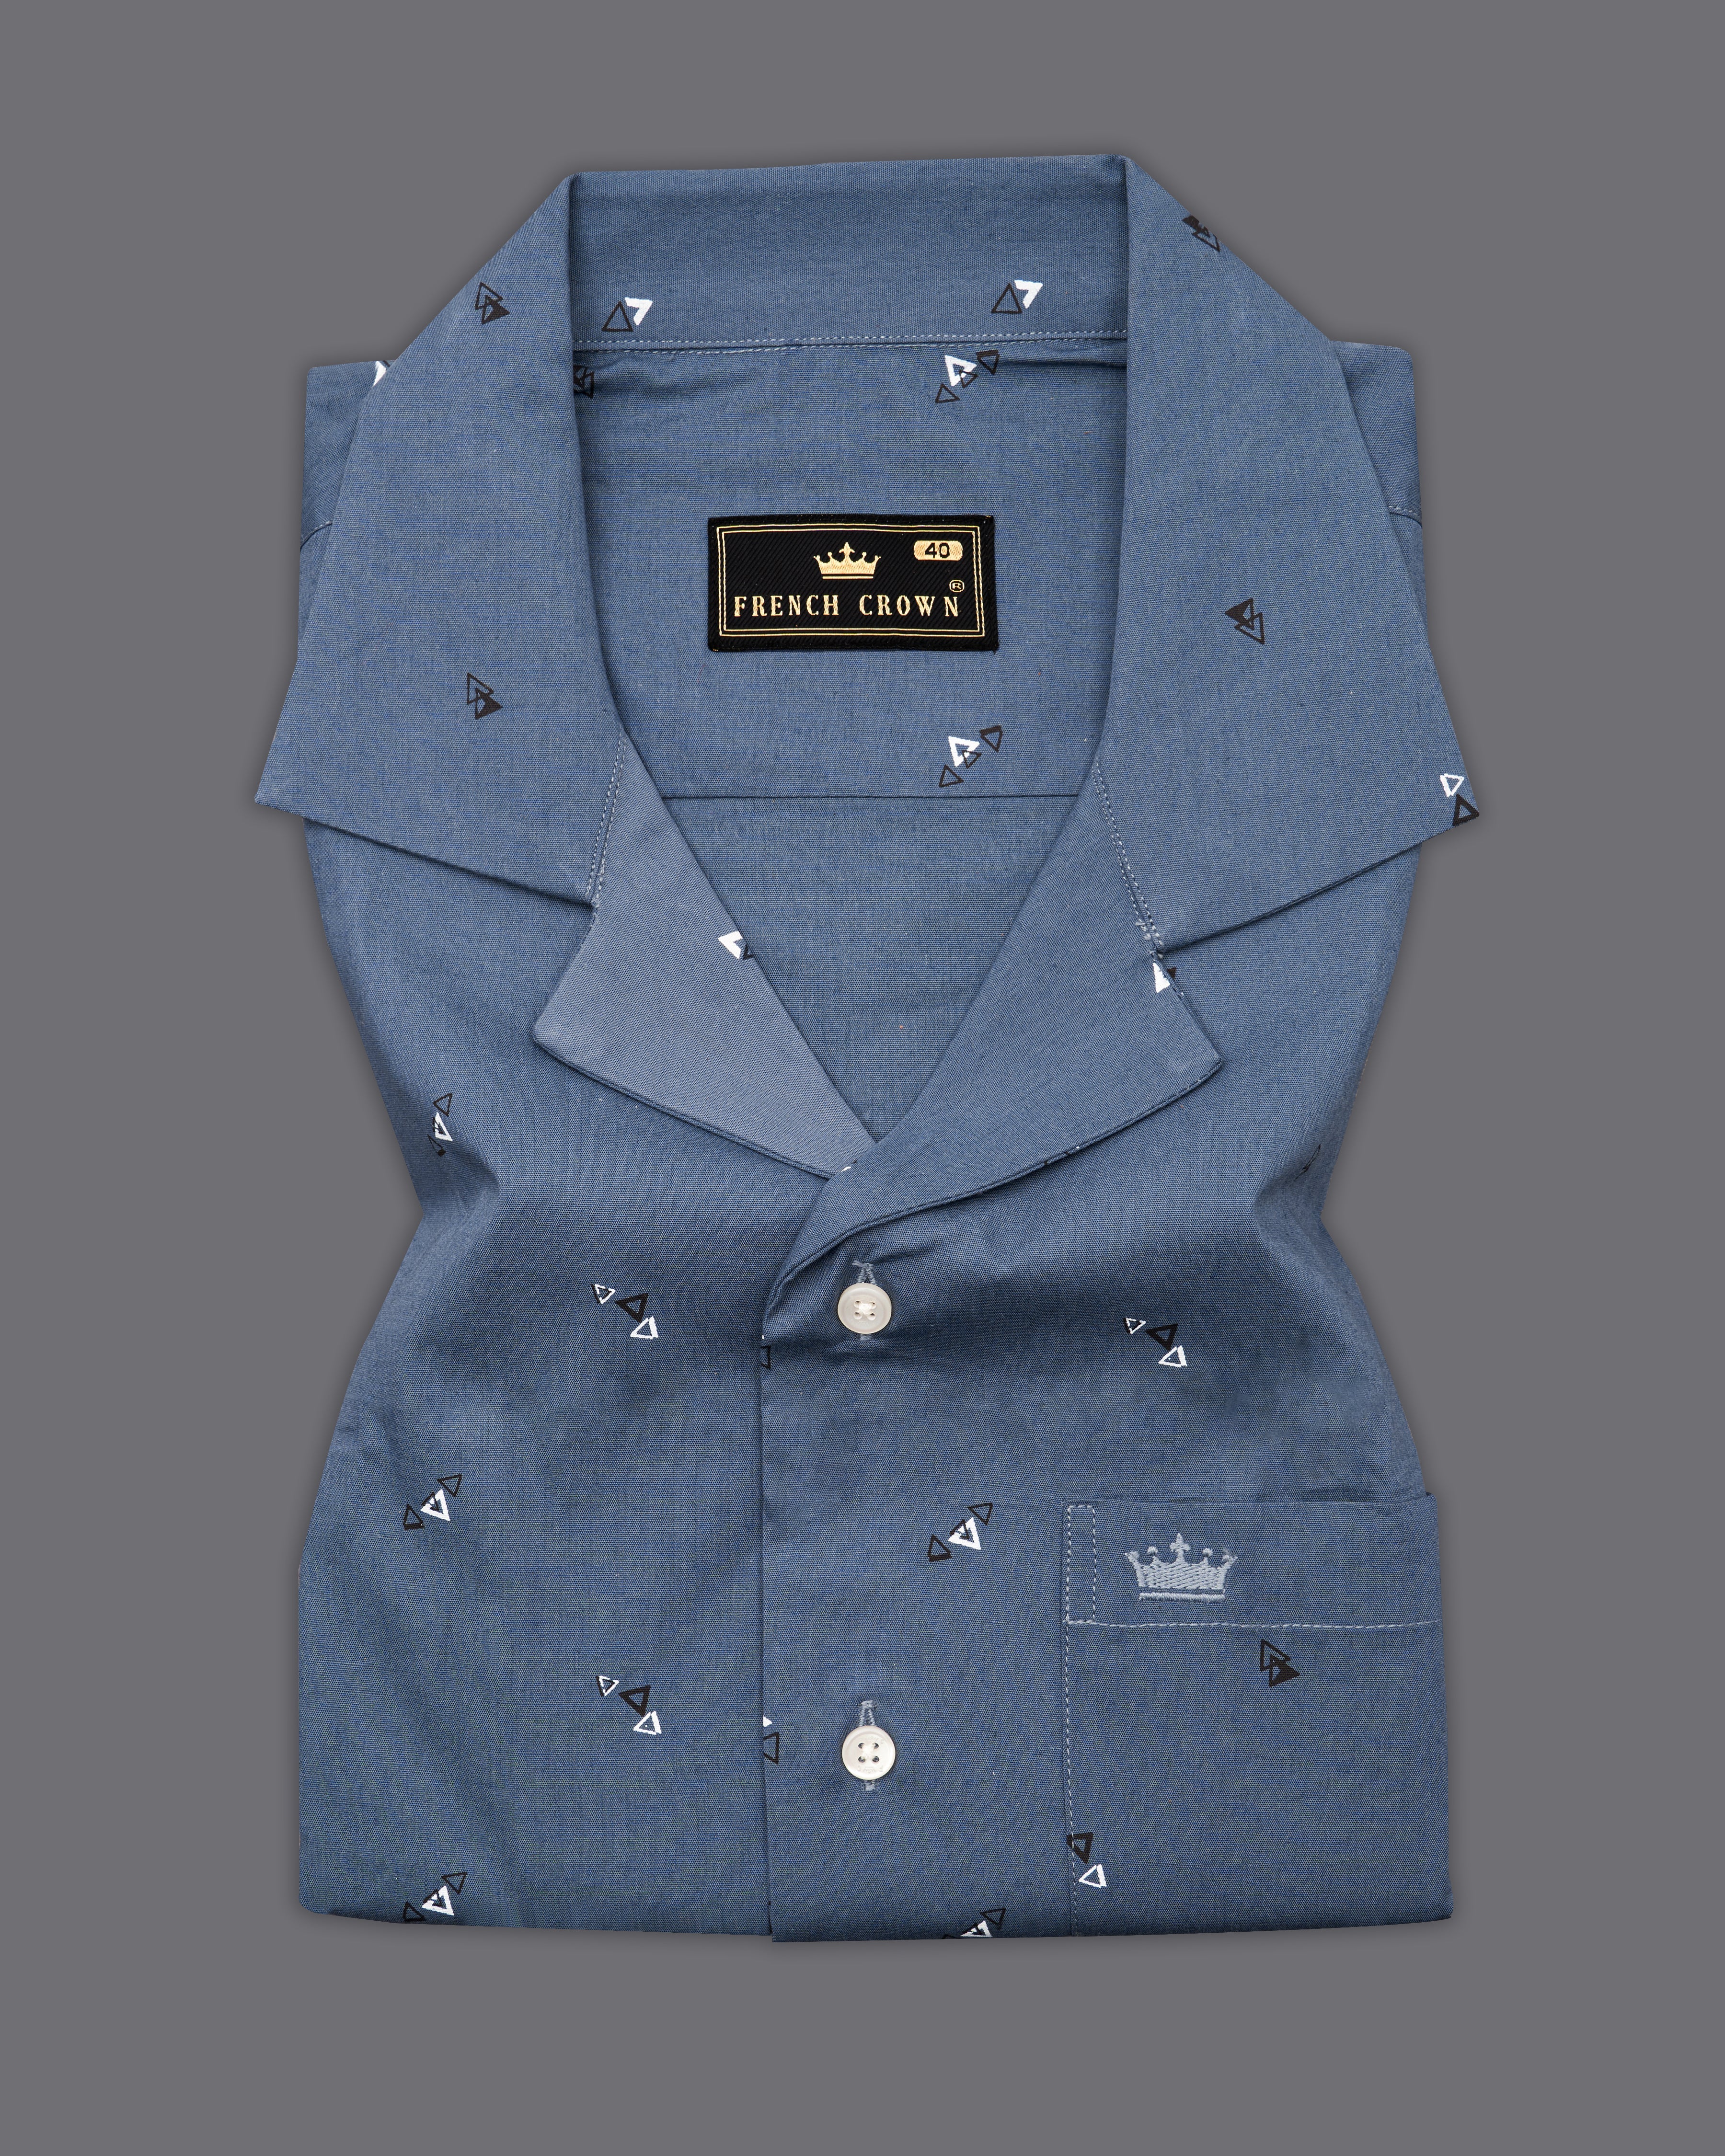 Waikawa Blue Printed Premium Cotton Half Sleeves Shirt 9784-CC-SS-38, 9784-CC-SS-39, 9784-CC-SS-40, 9784-CC-SS-42, 9784-CC-SS-44, 9784-CC-SS-46, 9784-CC-SS-48, 9784-CC-SS-50, 9784-CC-SS-52